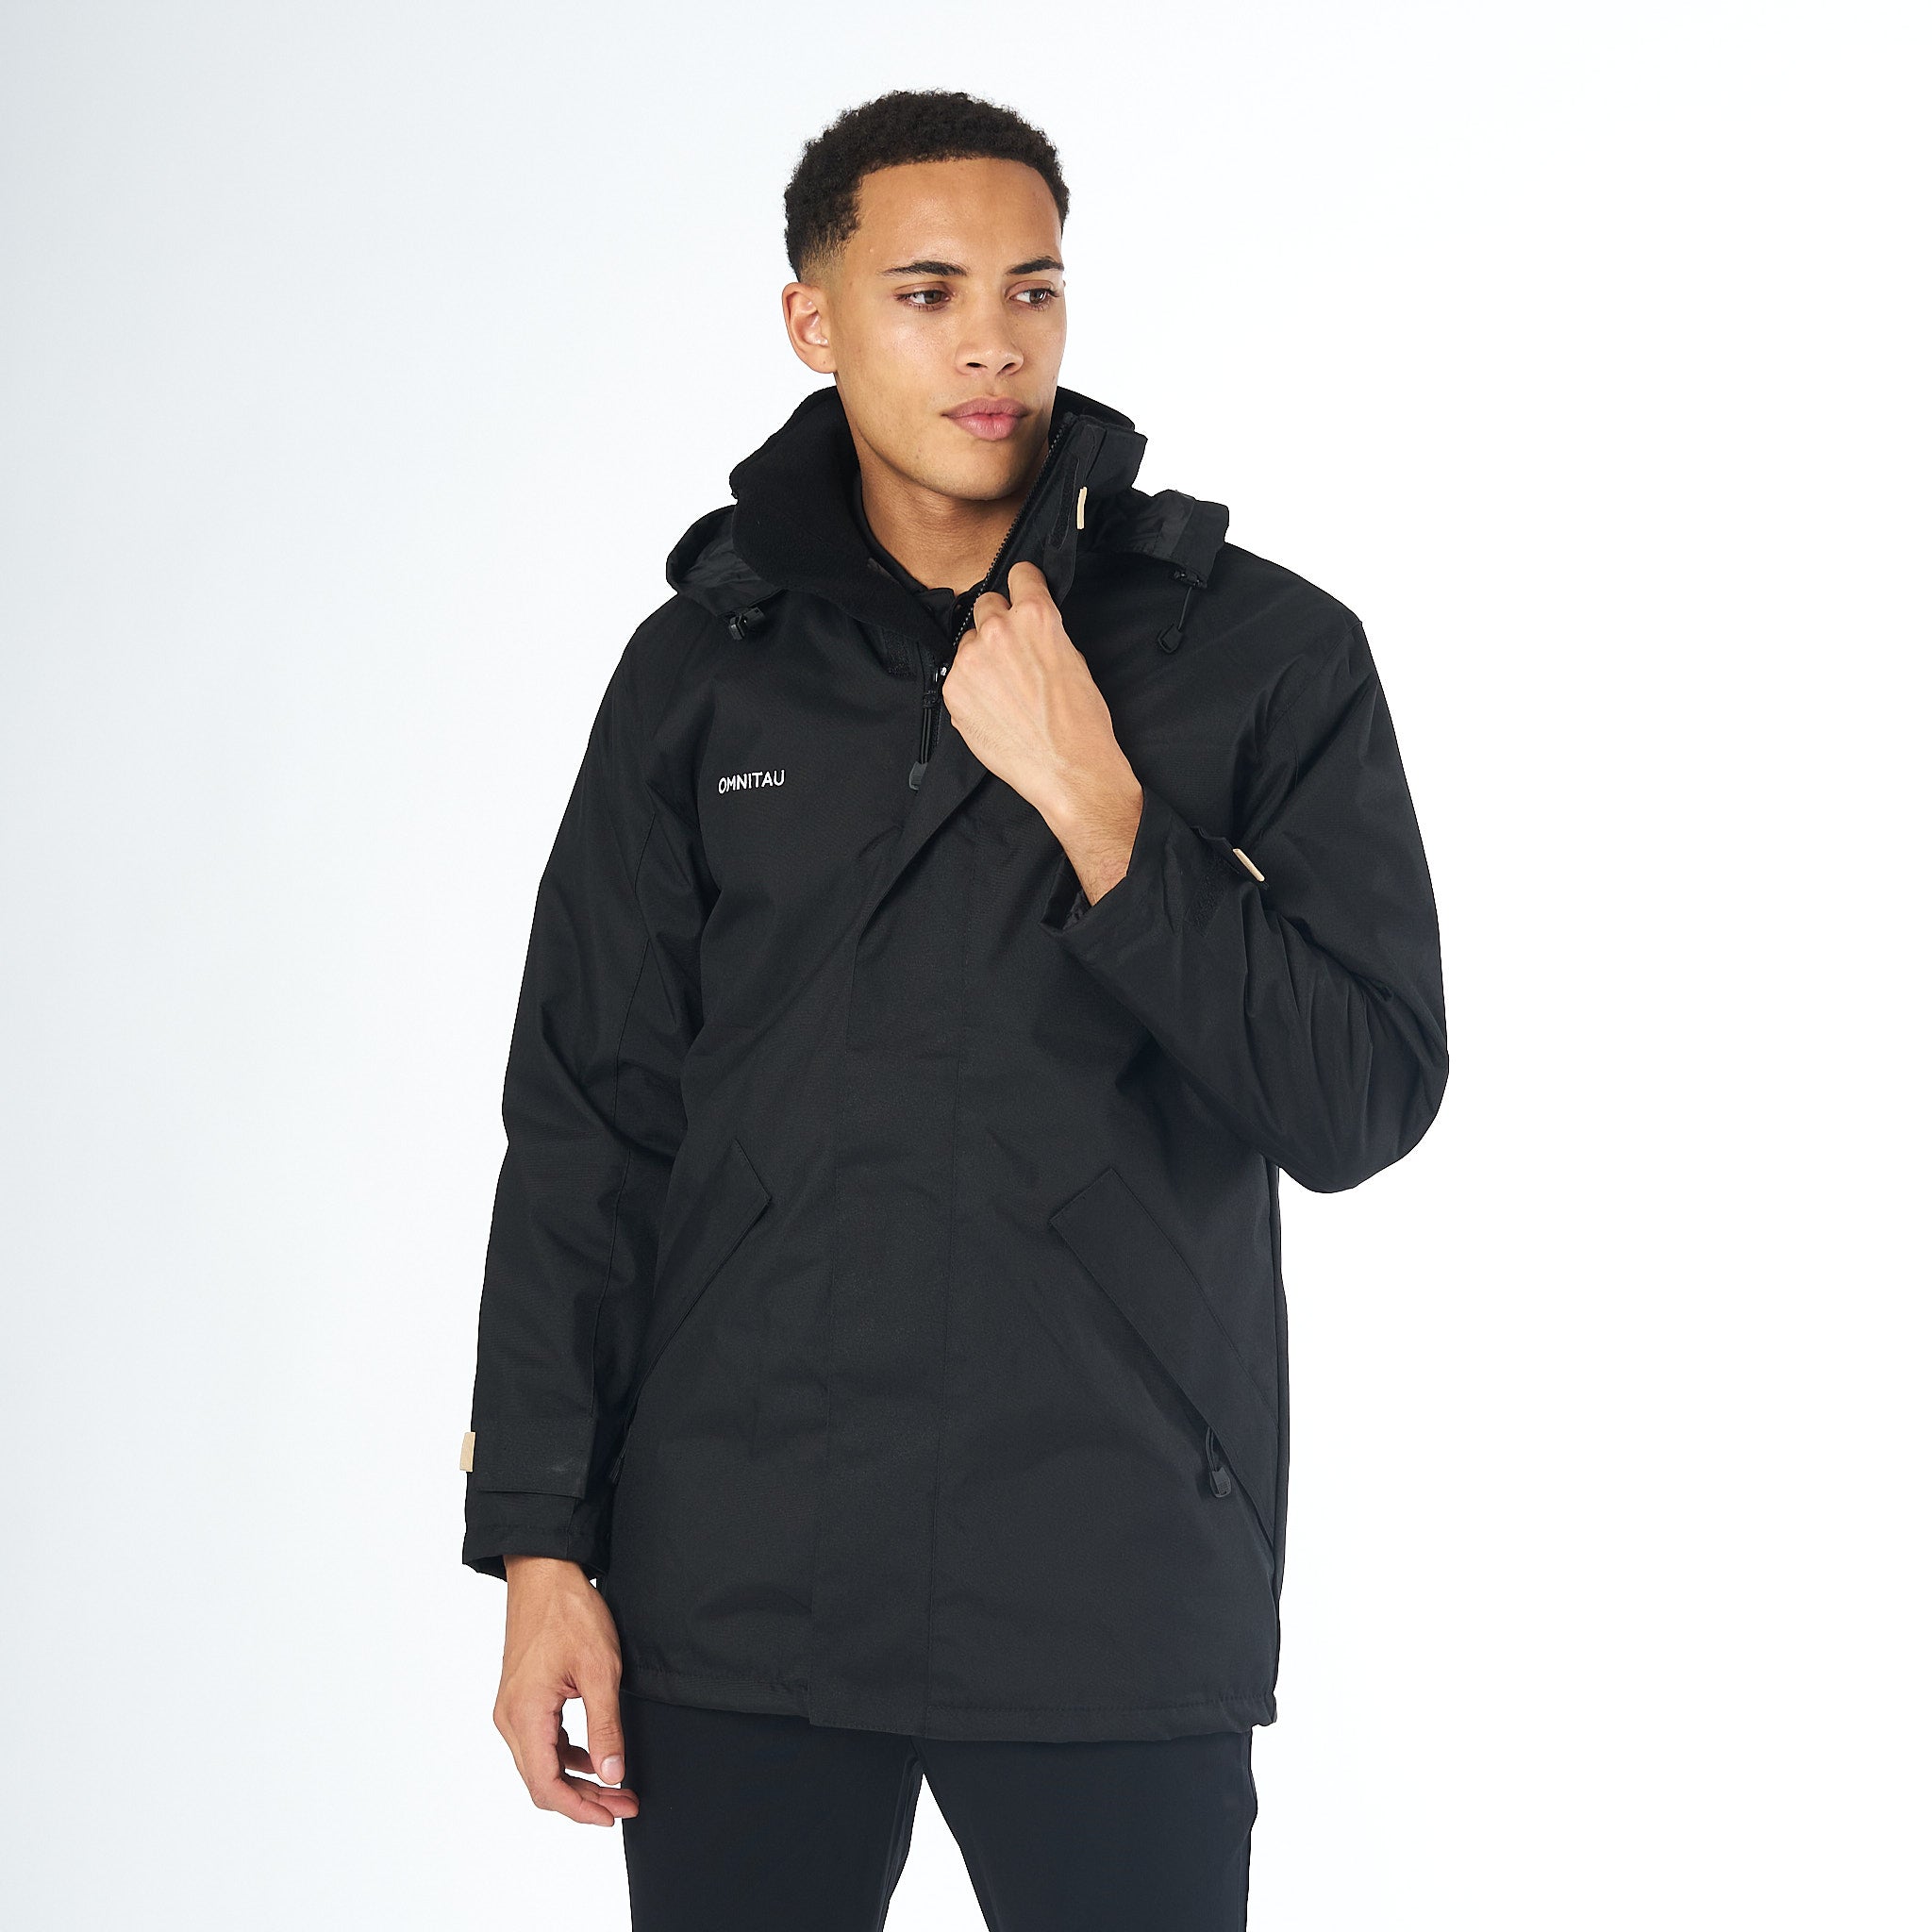 Omnitau Men's Team Sports Breathable Sideline Jacket - Black